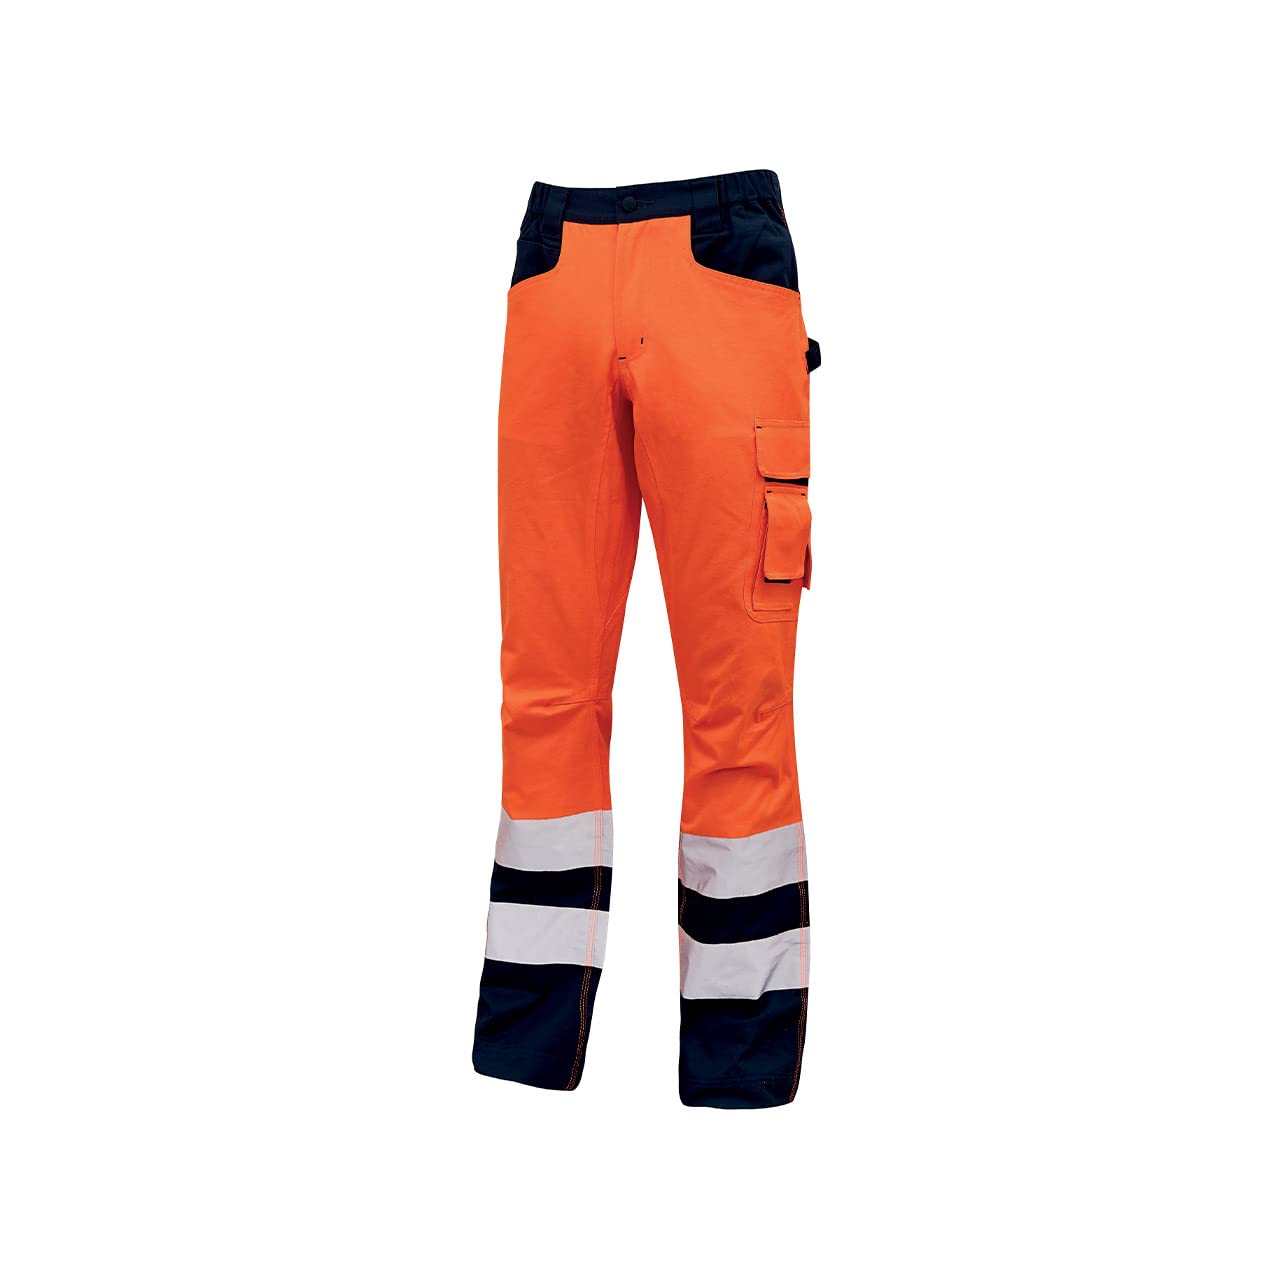 Pantalone alta visibilita light arancione fluo tg.s